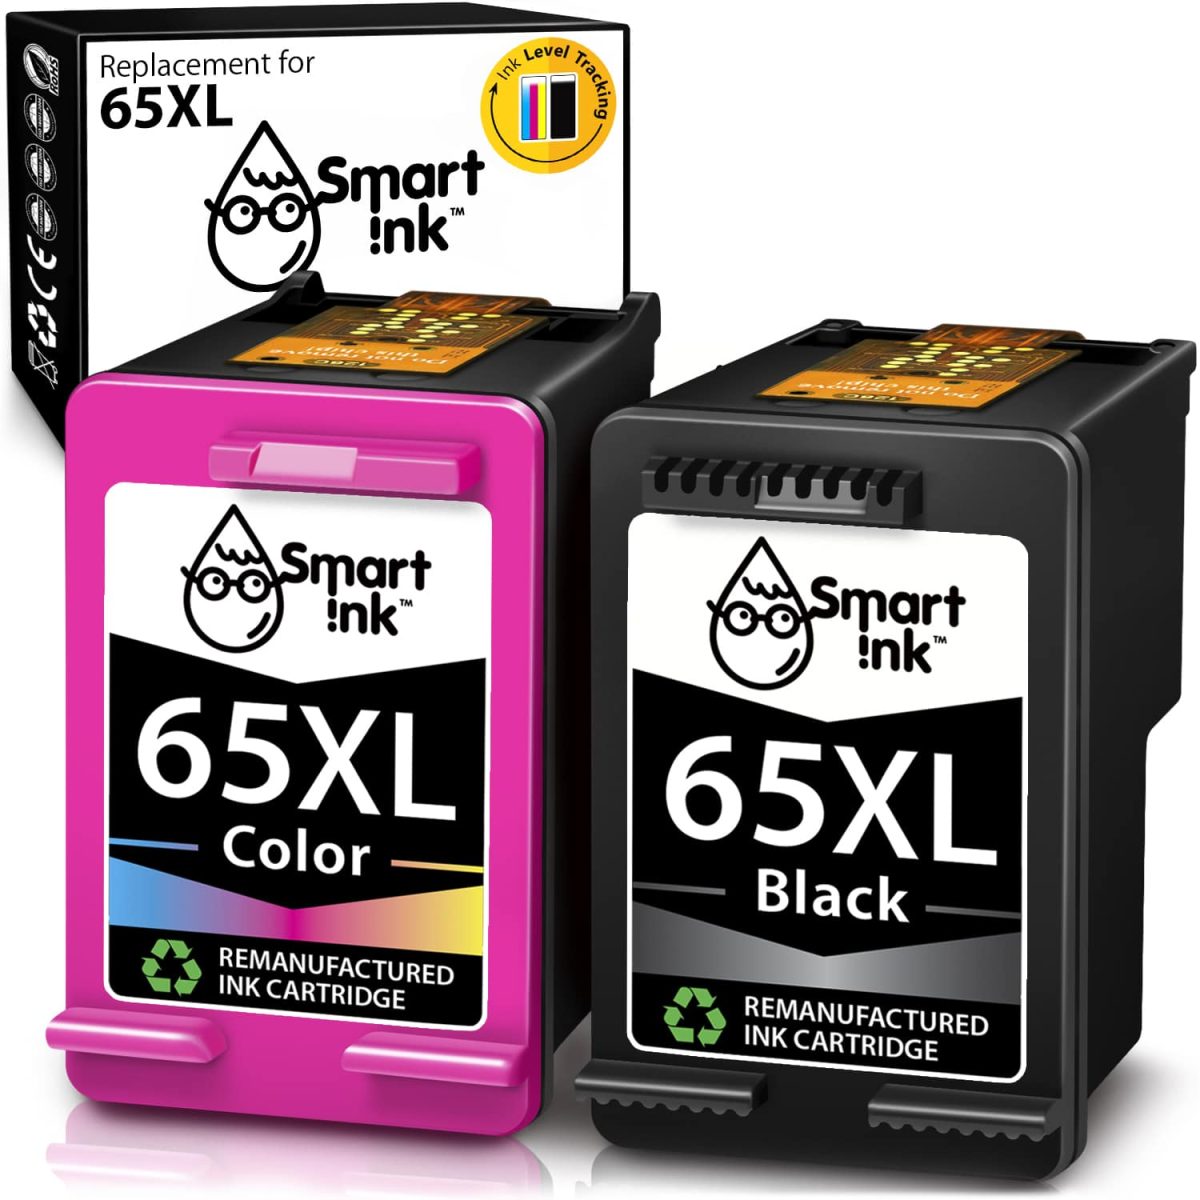 Hp Deskjet 3700 Ink Cartridges Buy Ink Refills For Hp Deskjet 3700 In Usa 5499